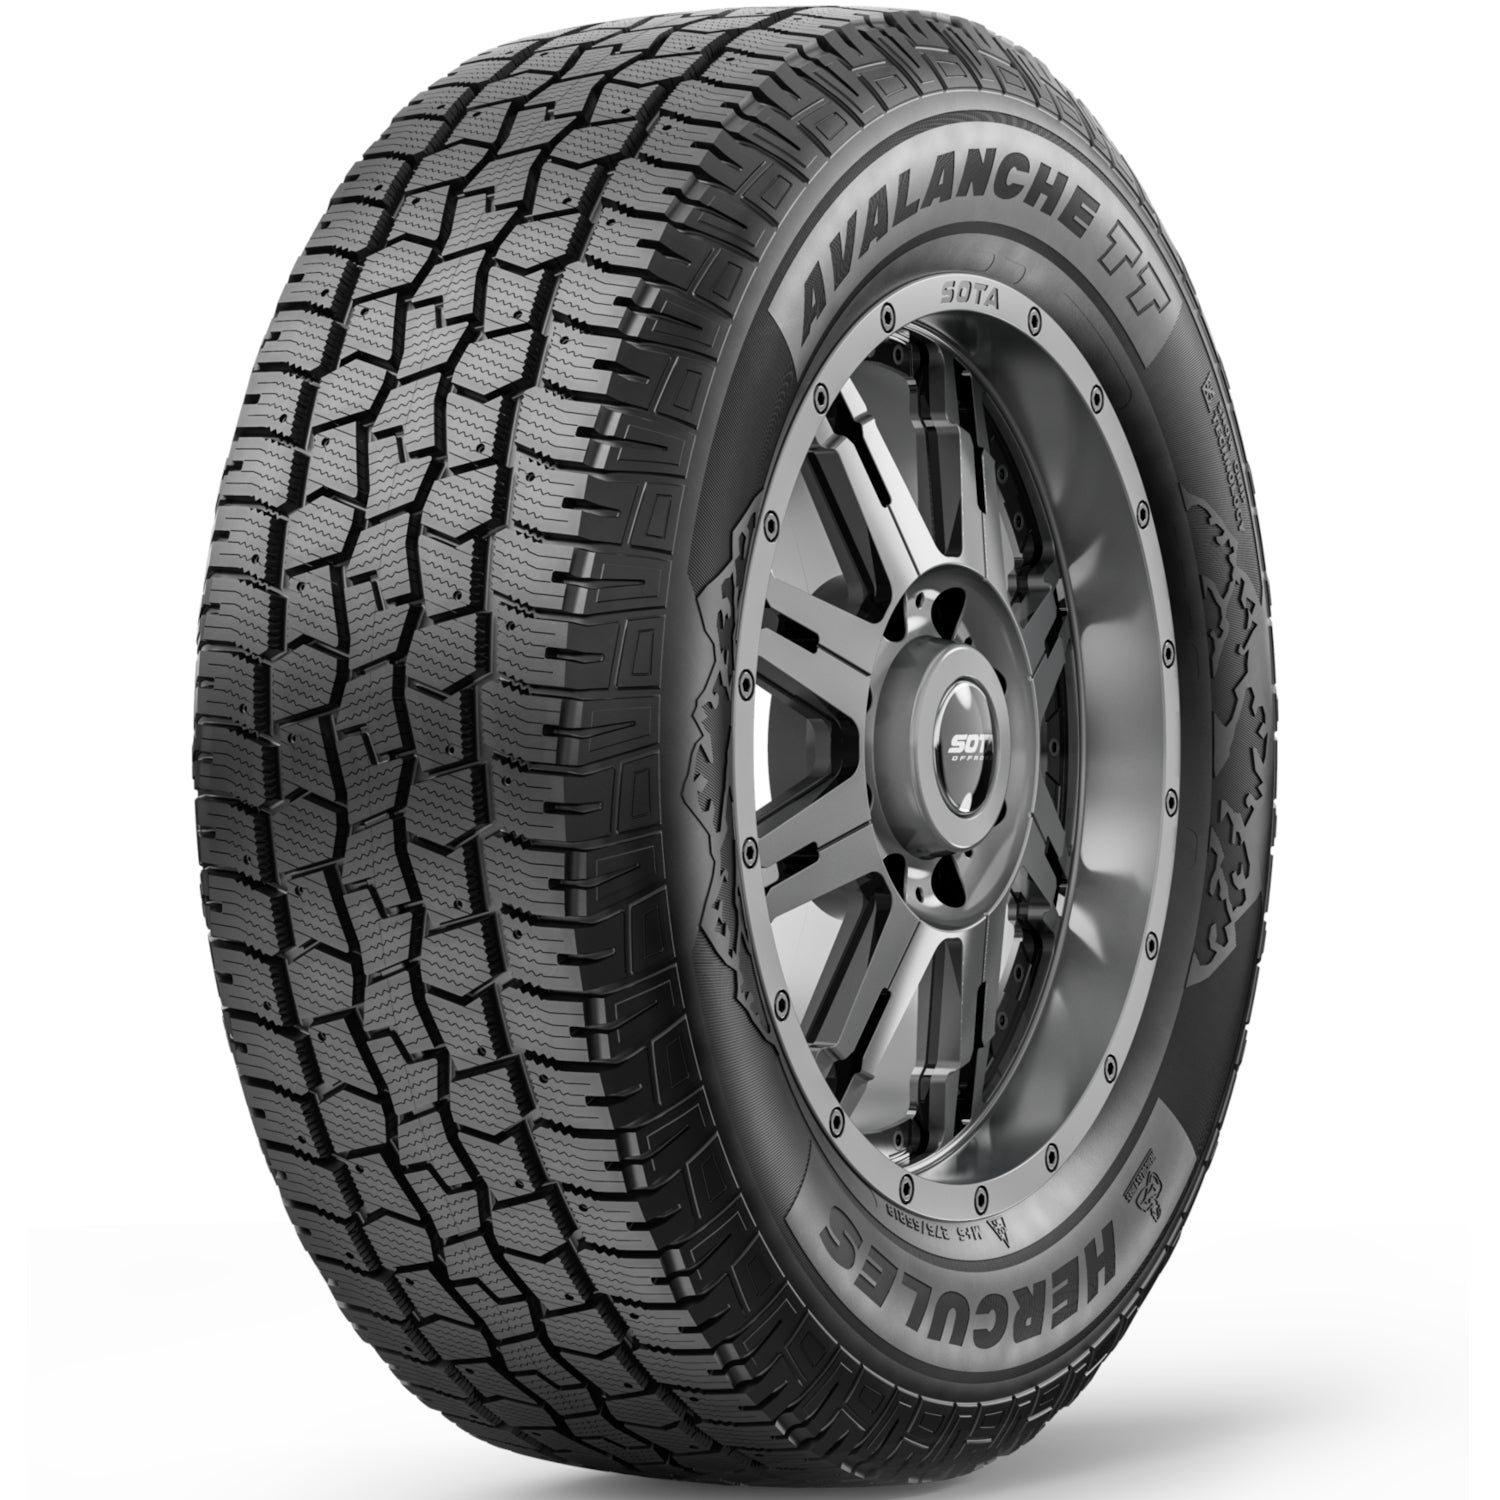 HERCULES AVALANCHE TT LT275/65R18 (32.2X10.8R 18) Tires